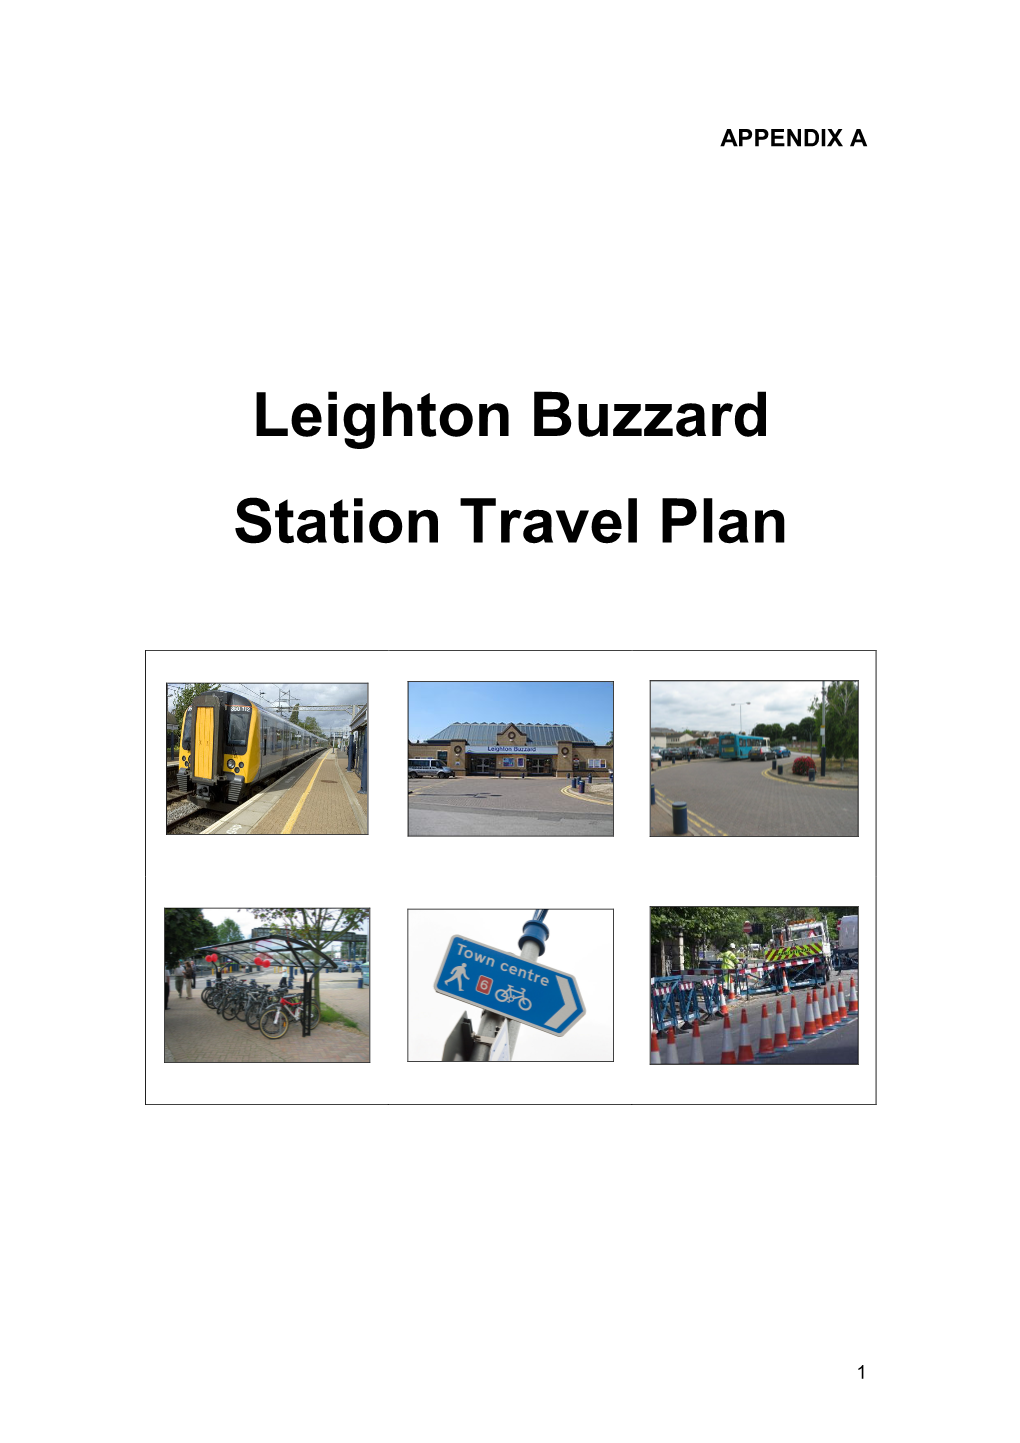 Leighton Buzzard Station Travel Plan Indicators and Targets